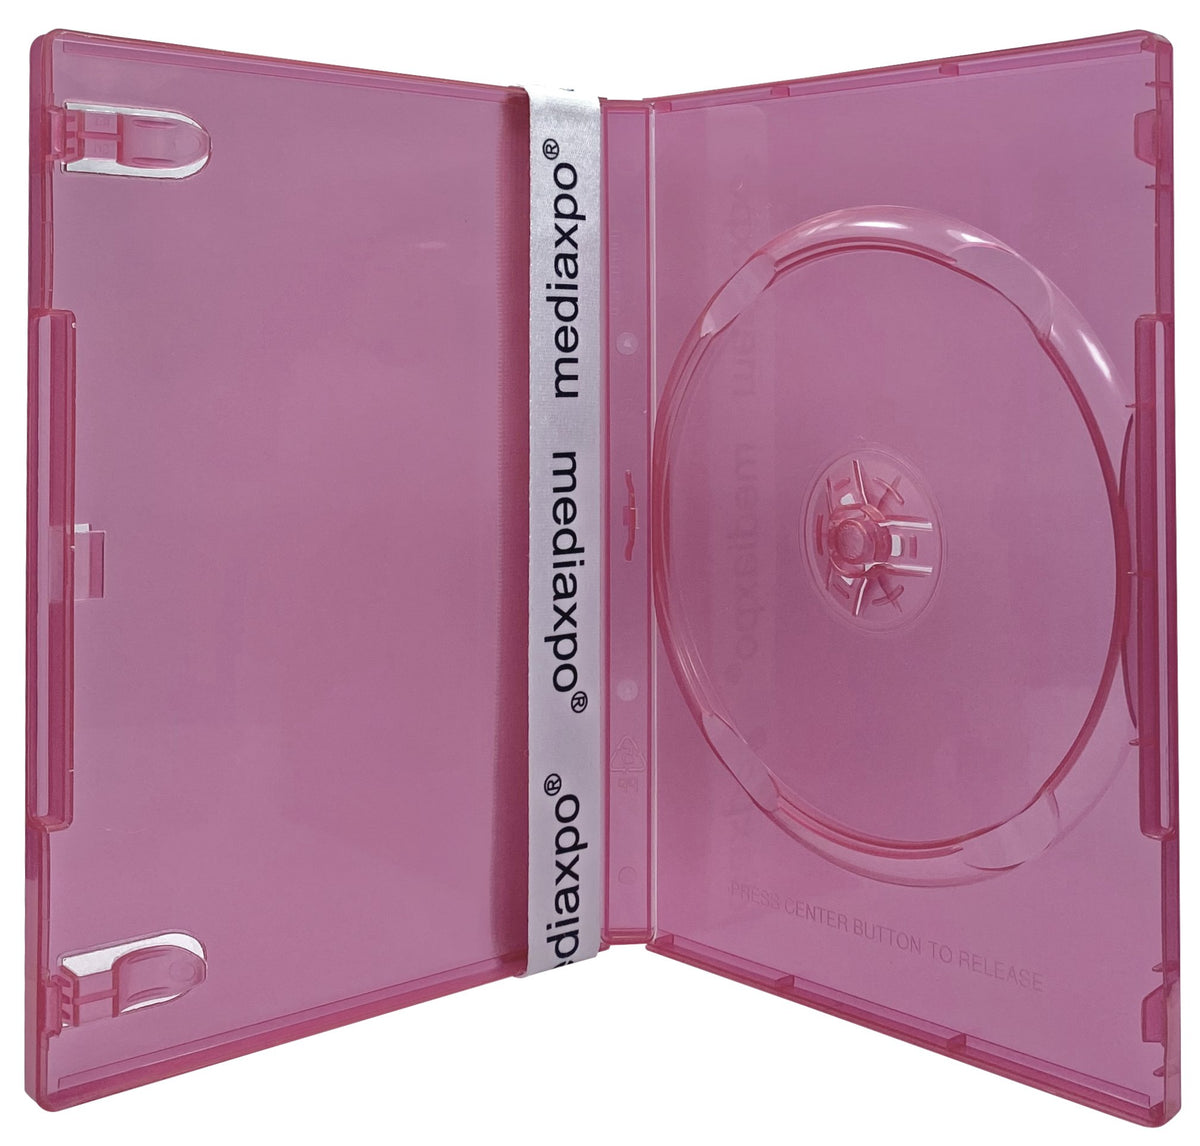 CheckOutStore (50) Premium Standard Single 1-Disc DVD Cases 14mm (White)